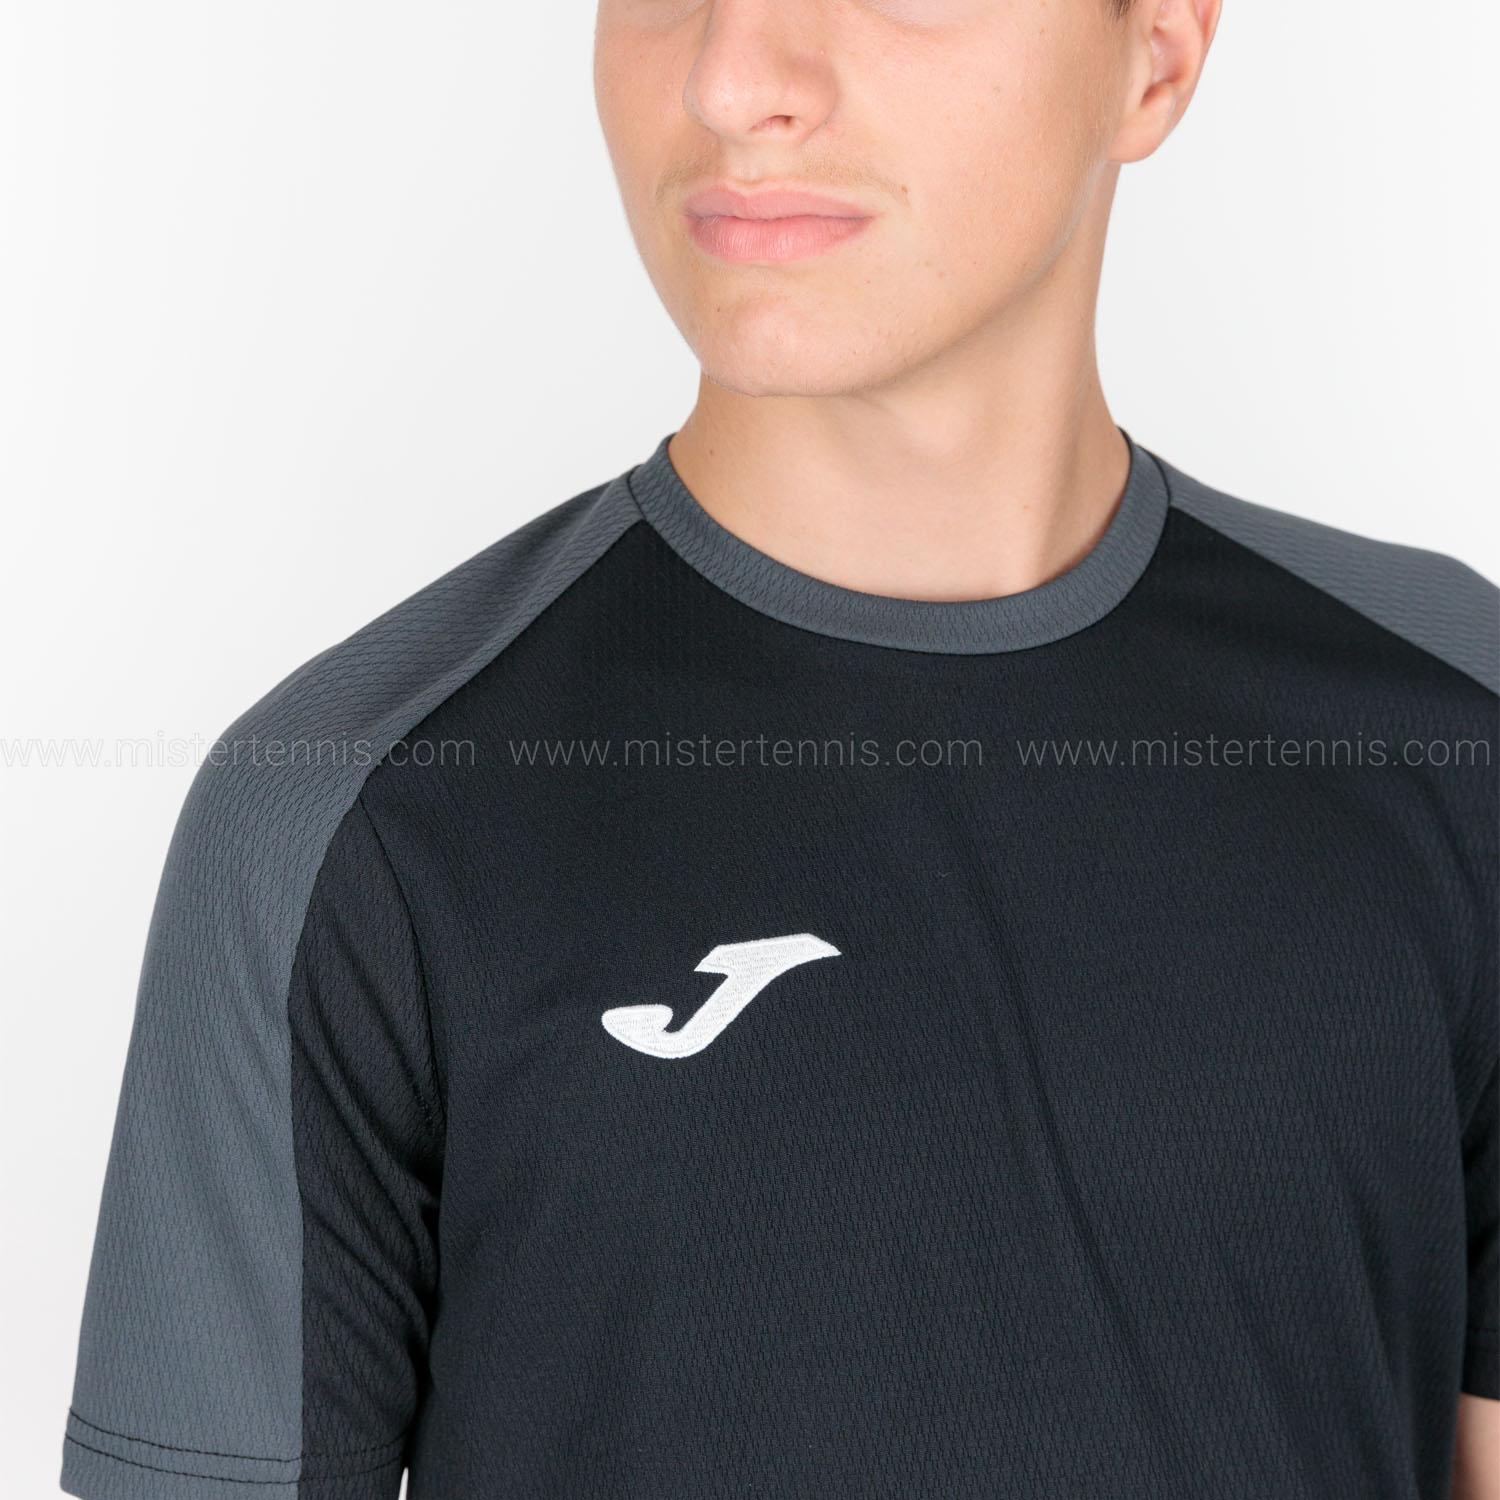 Joma Eco Championship Camiseta - Black/Anthracite